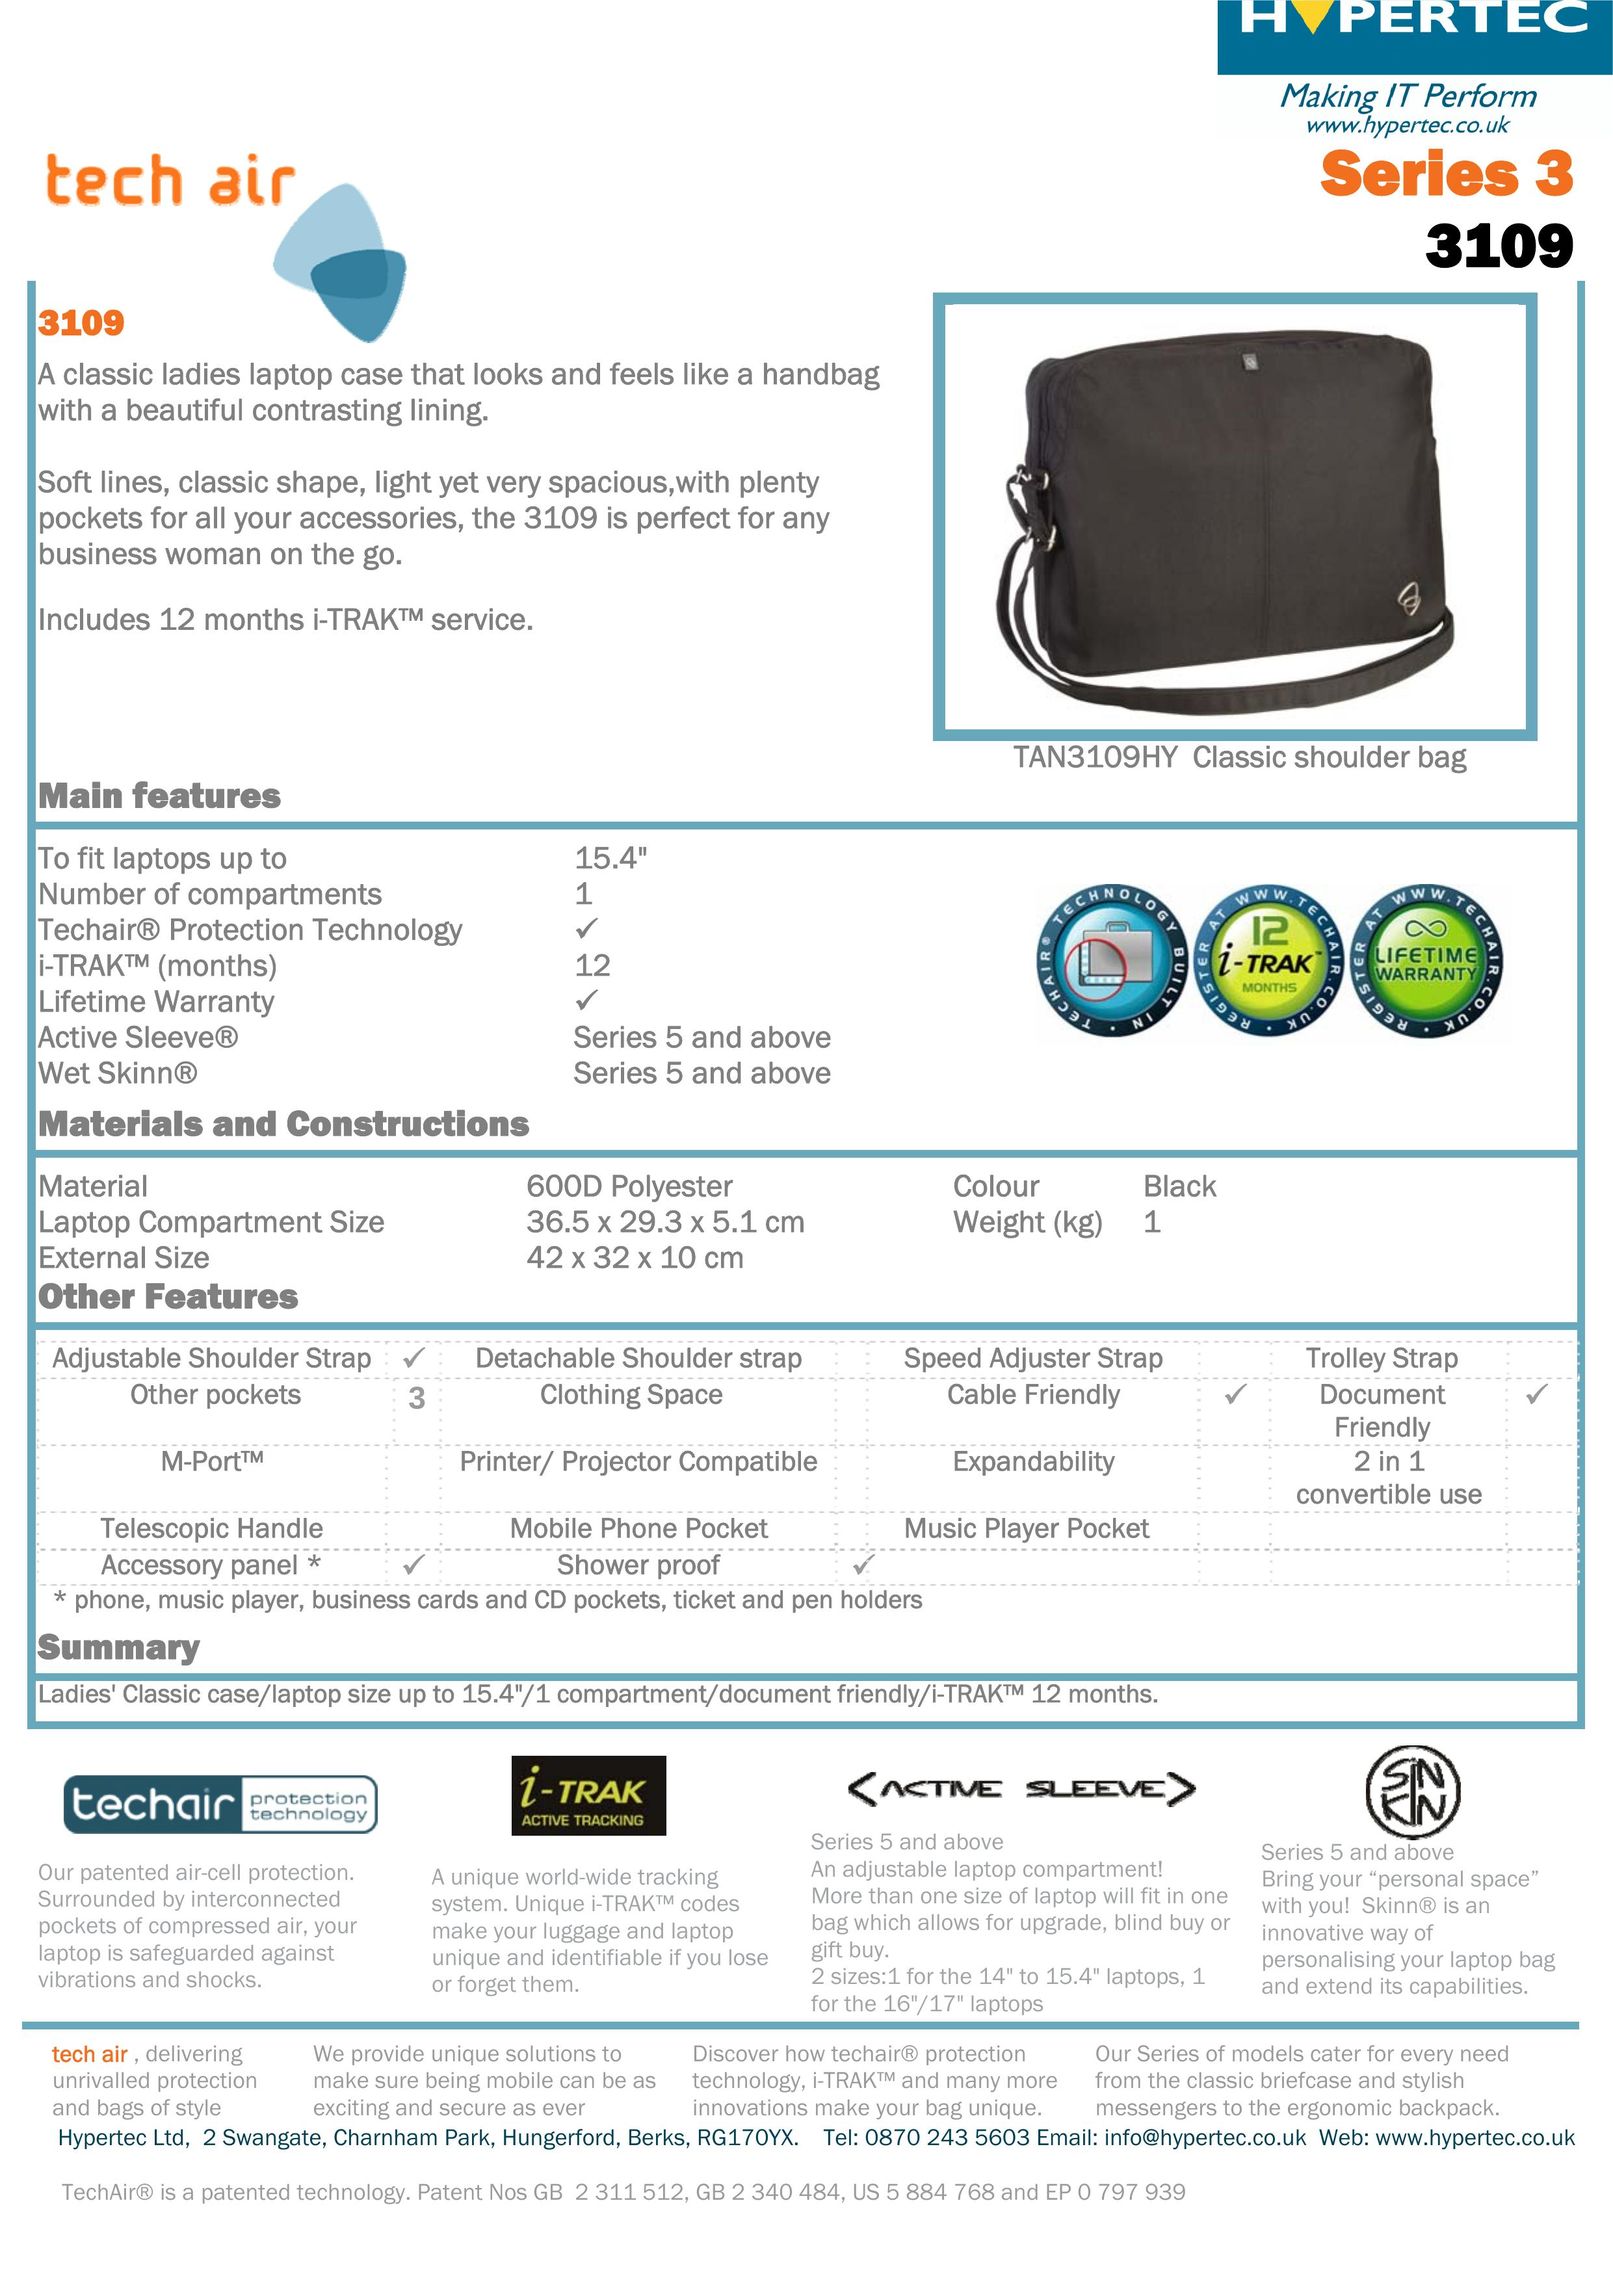 Hypertec 3109 Carrying Case User Manual